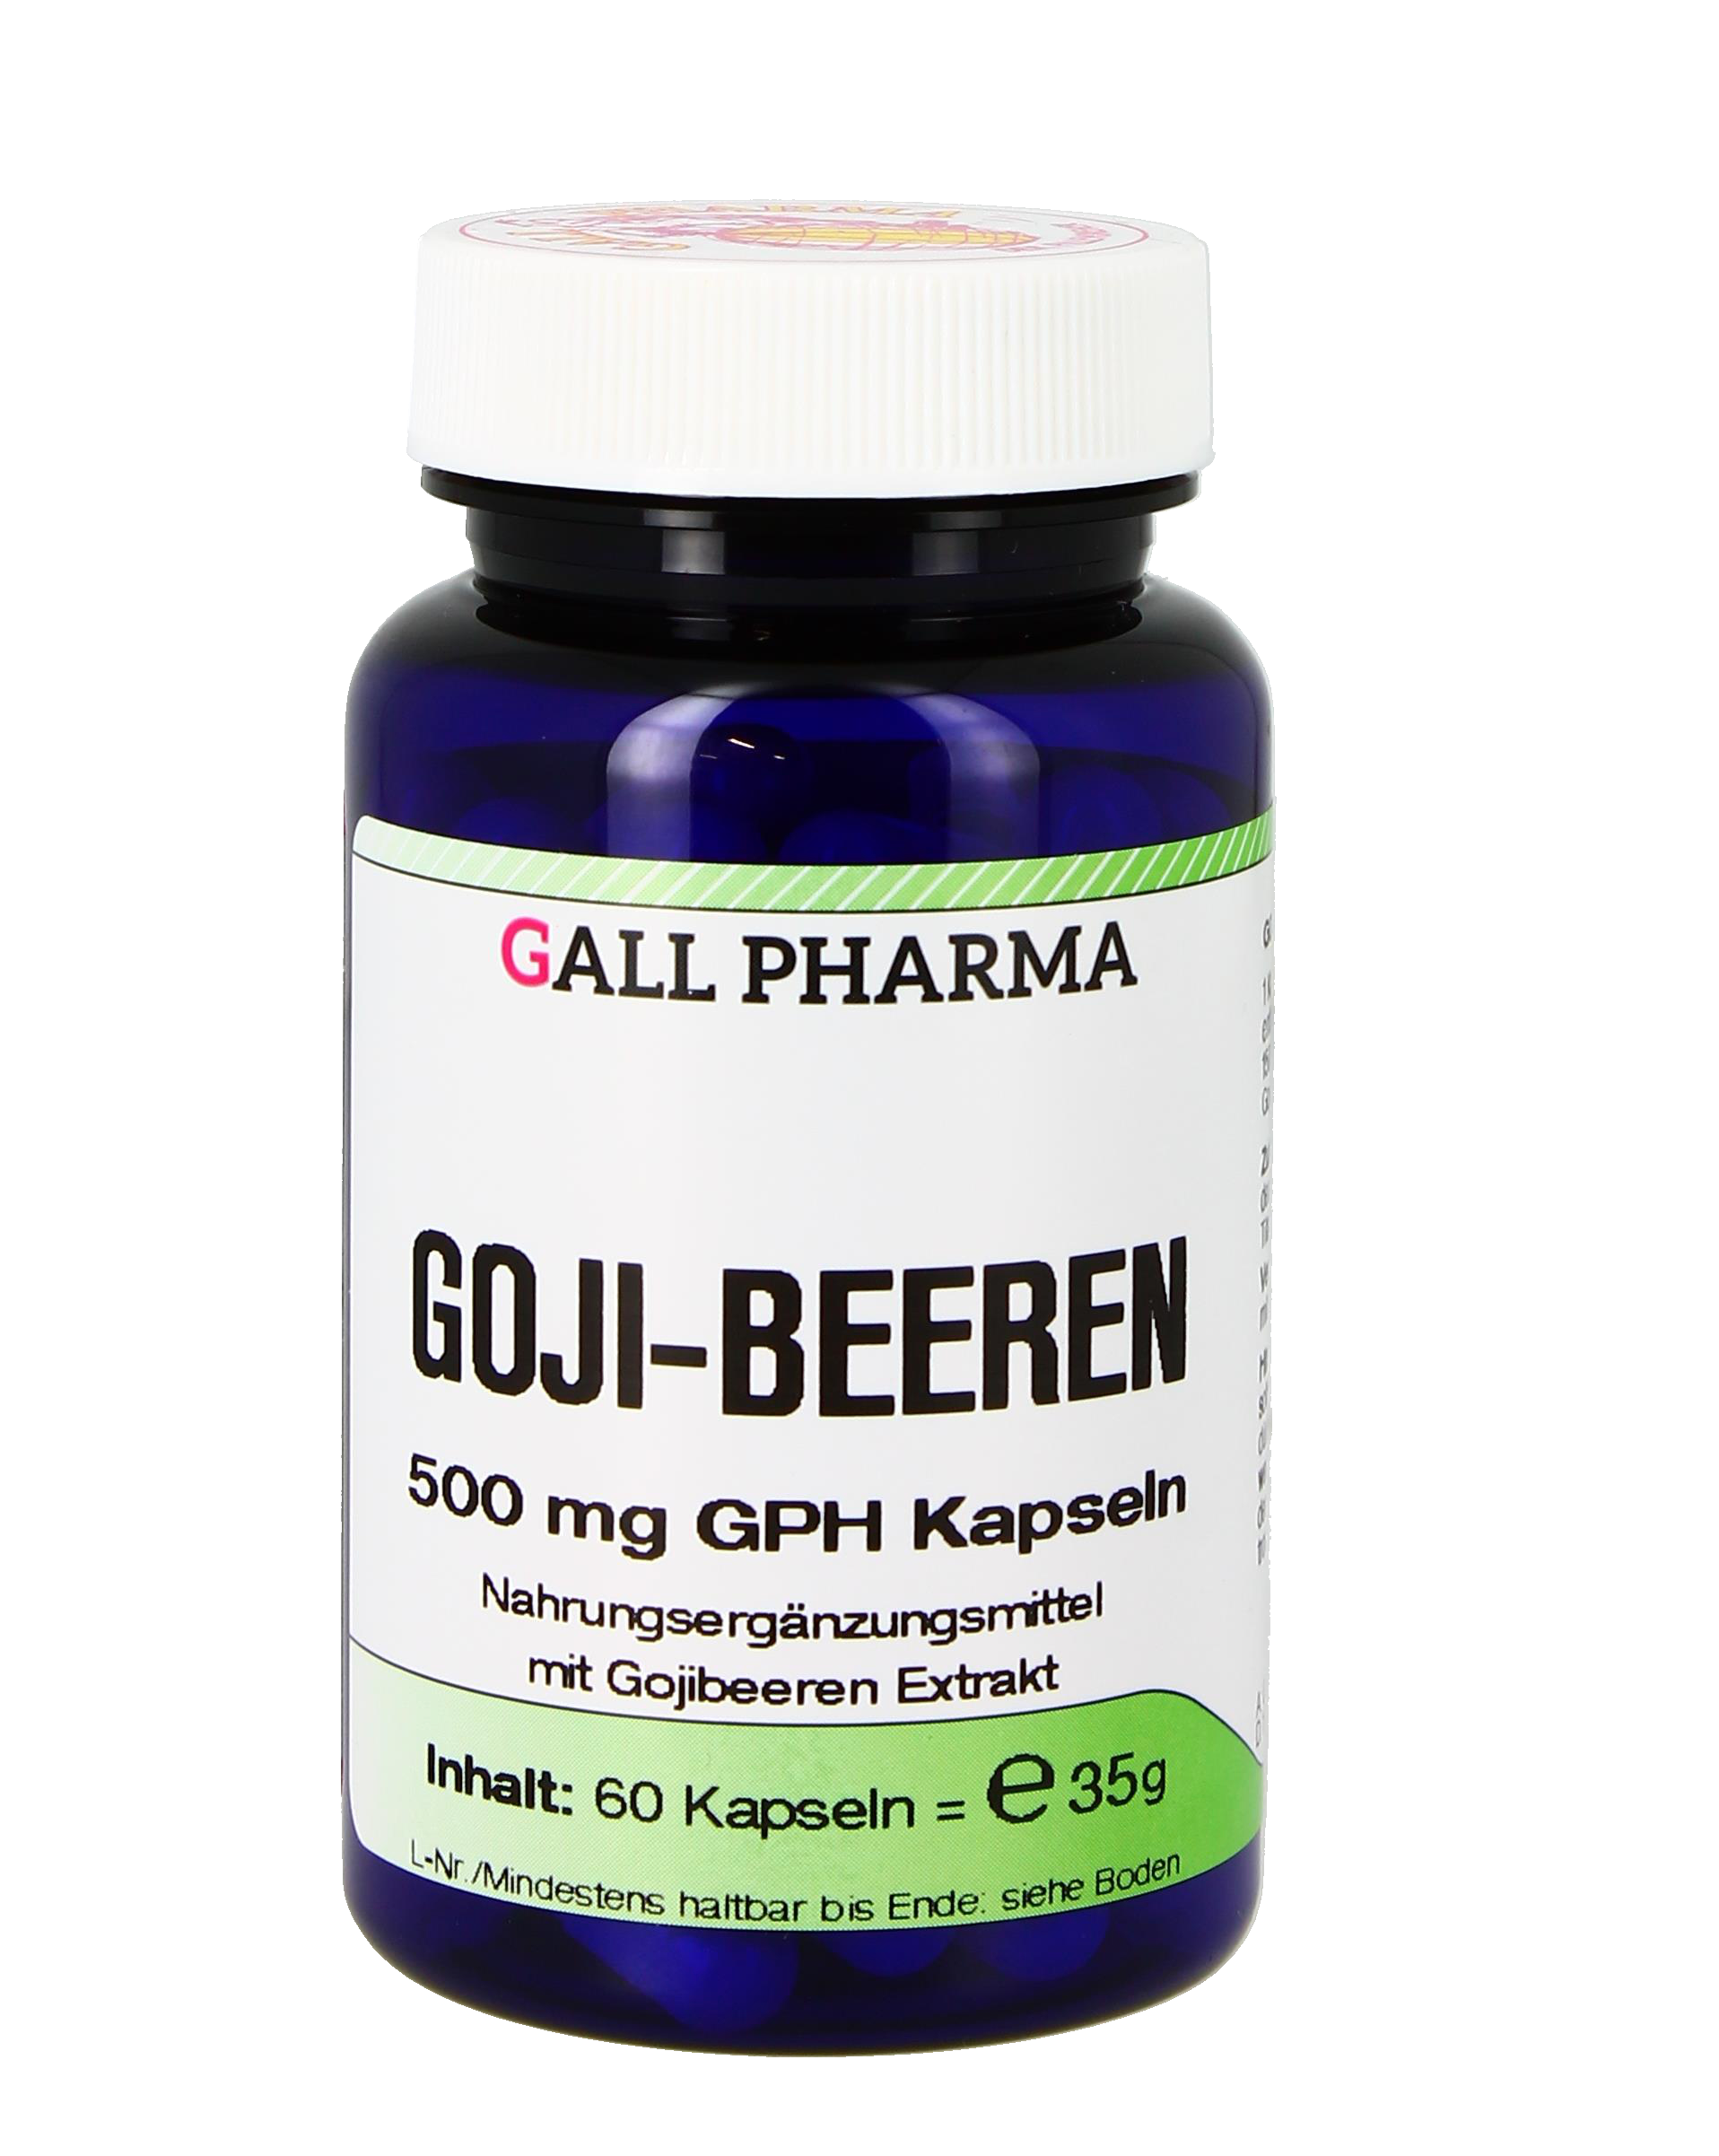 Goji-Beeren 500 mg GPH Kapseln